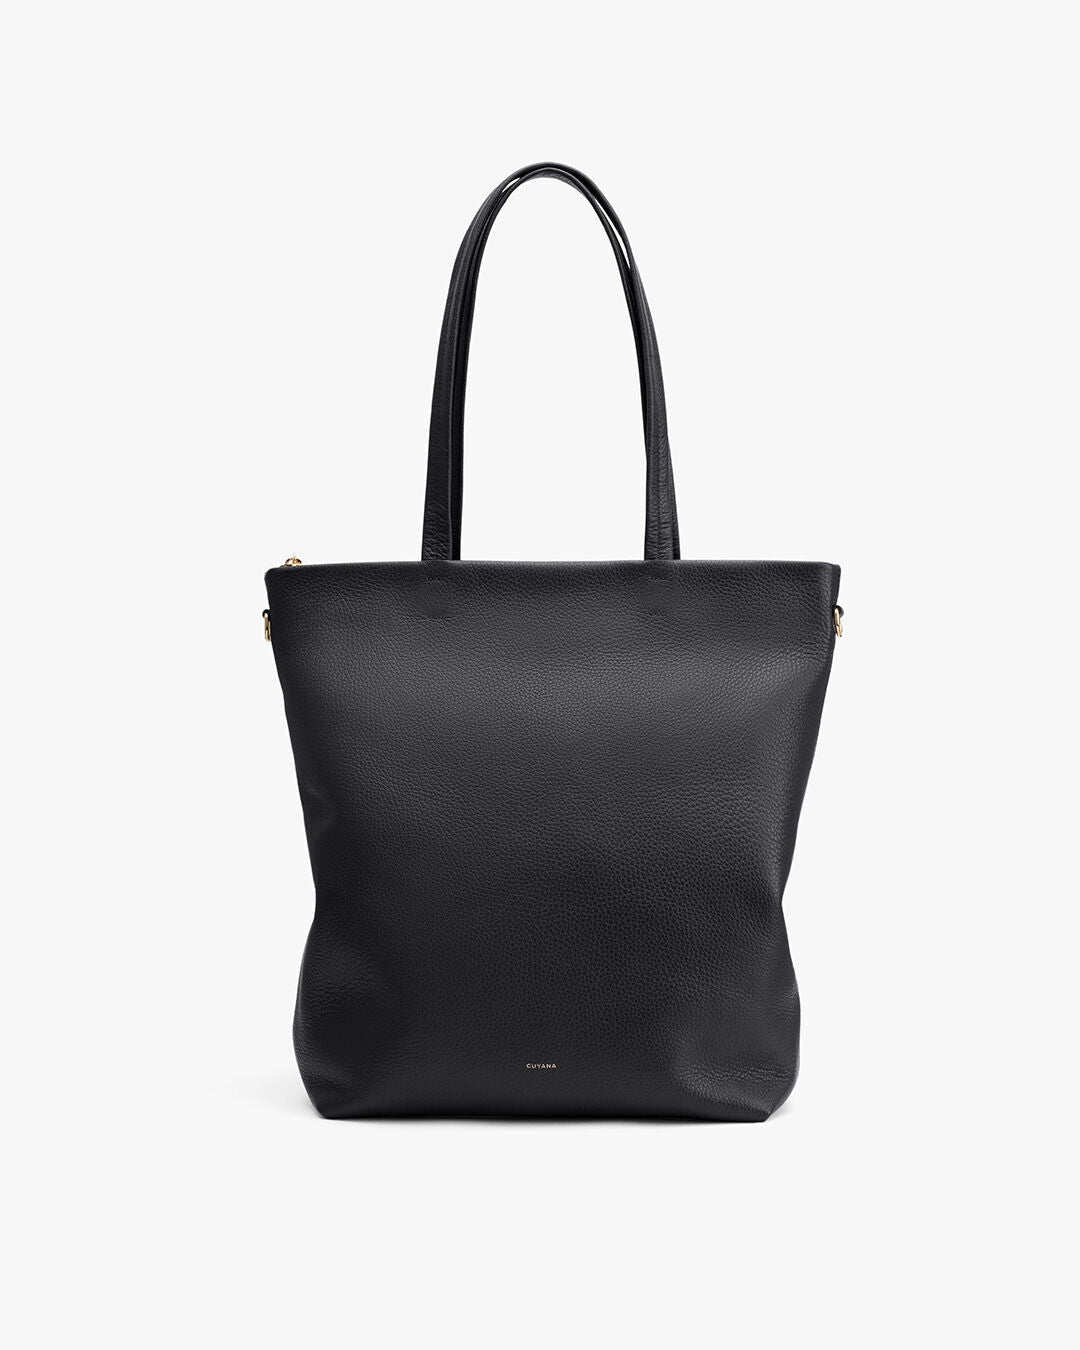 Calvin Klein Sophia Black Tote Purse Novelty Cut out Hardware Handbag M27  for sale online | eBay